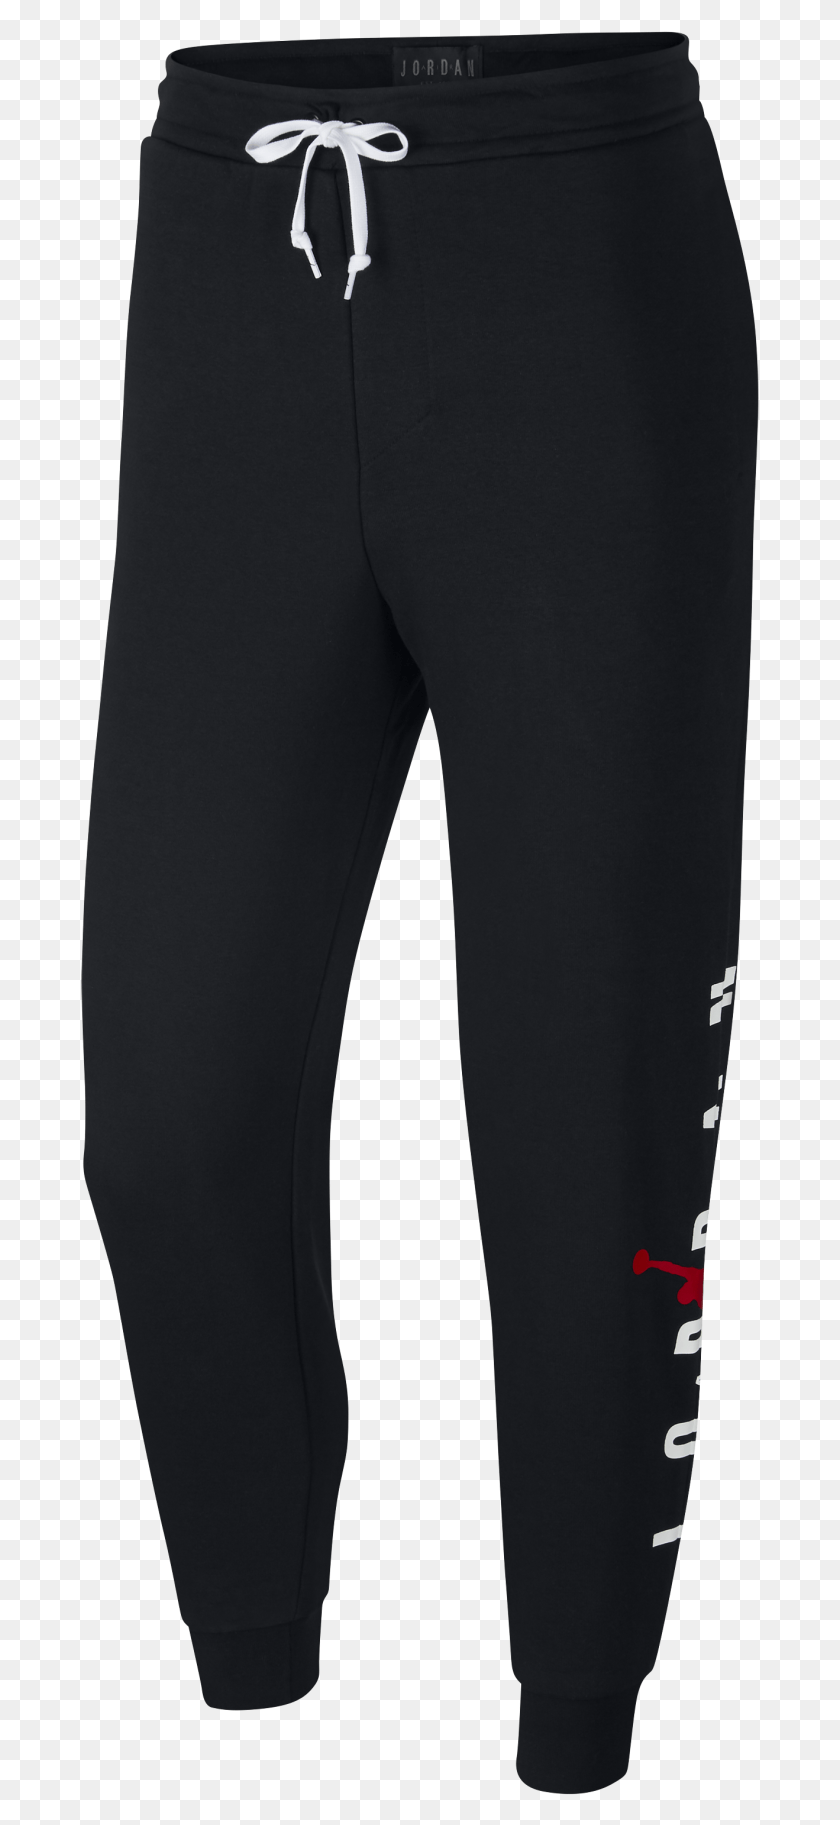 679x1765 Nike Jordan Jumpman Air Fleece Pants Nike Tech Run Division Pant, Одежда, Одежда, Шорты Png Скачать